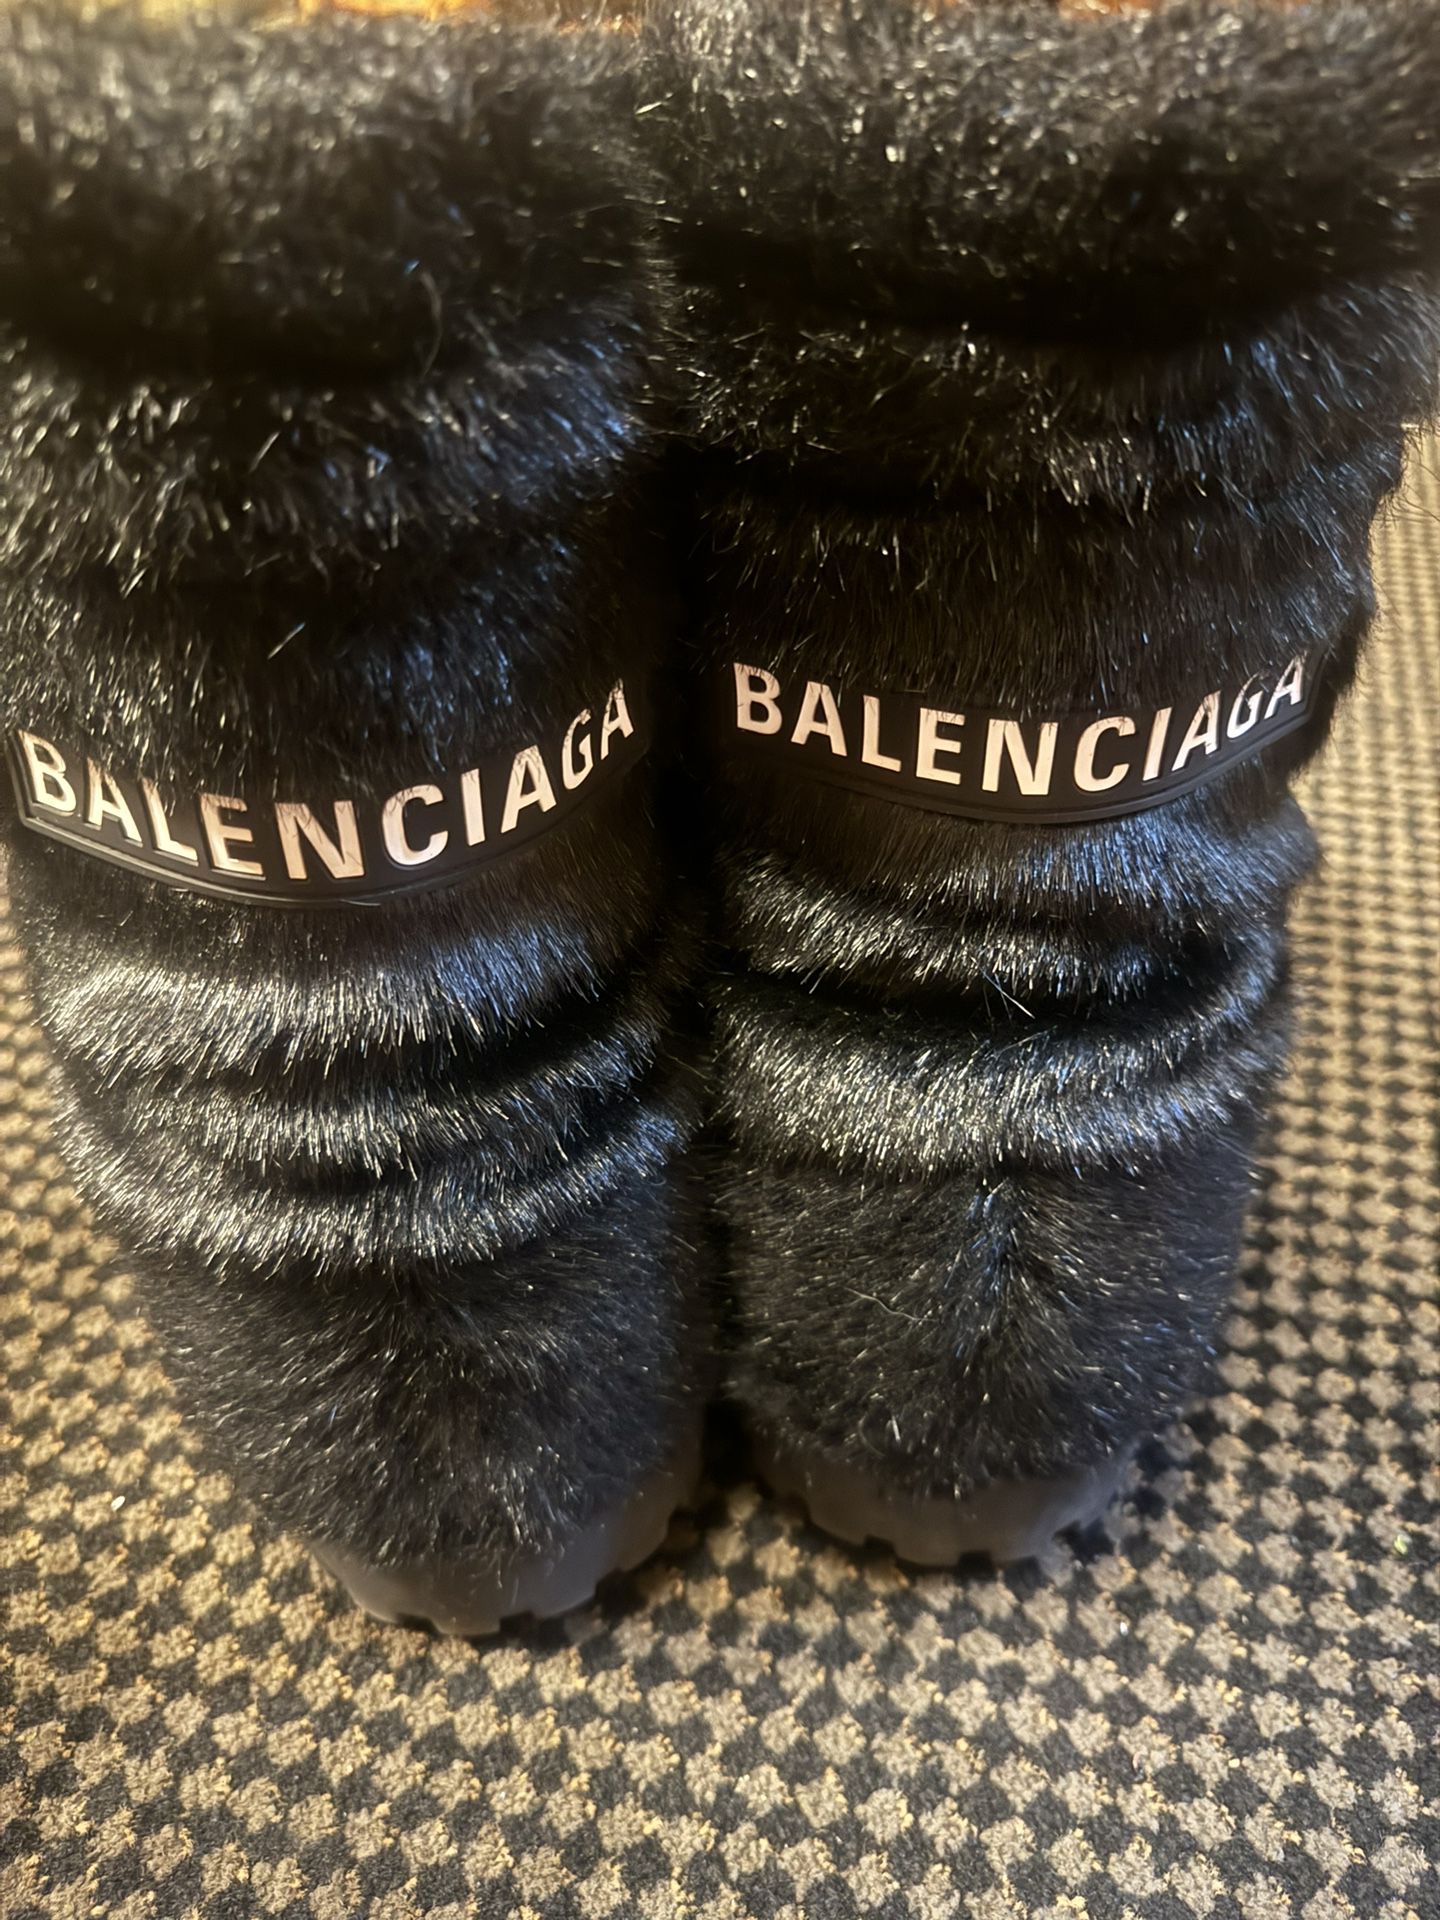 Black Balenciaga Fur Boots Size 37/38 EUR Size 7 US